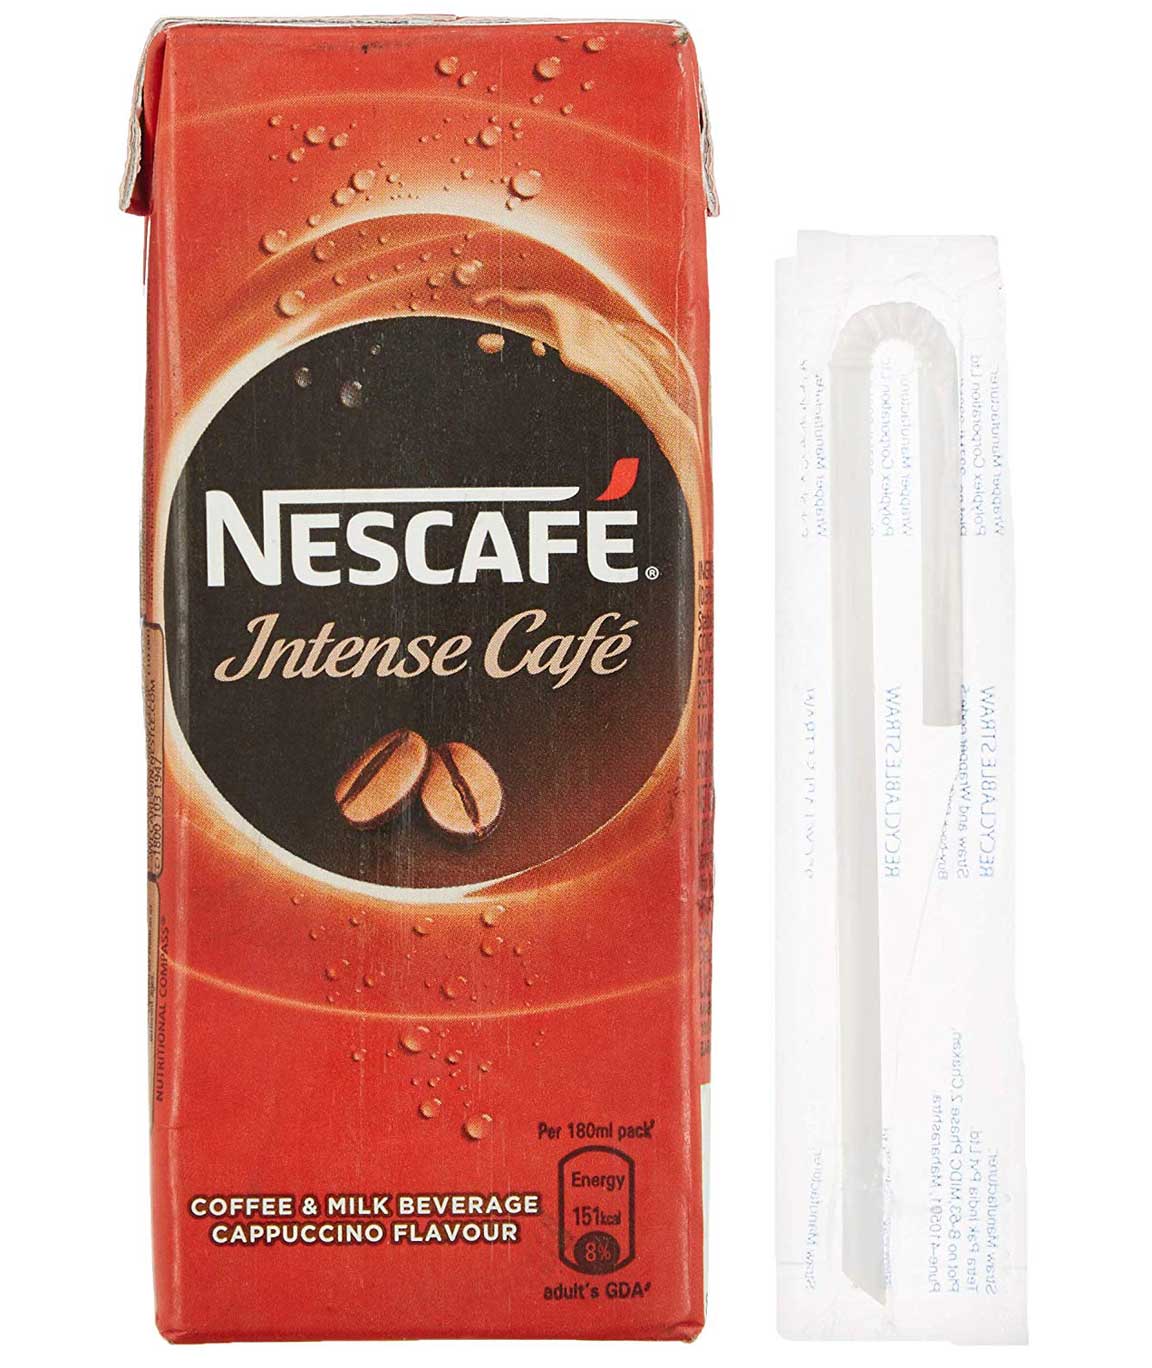 Nescafe Intense Cafe, Ready-To-Drink Cold Coffee, 180Ml Tetra Pak